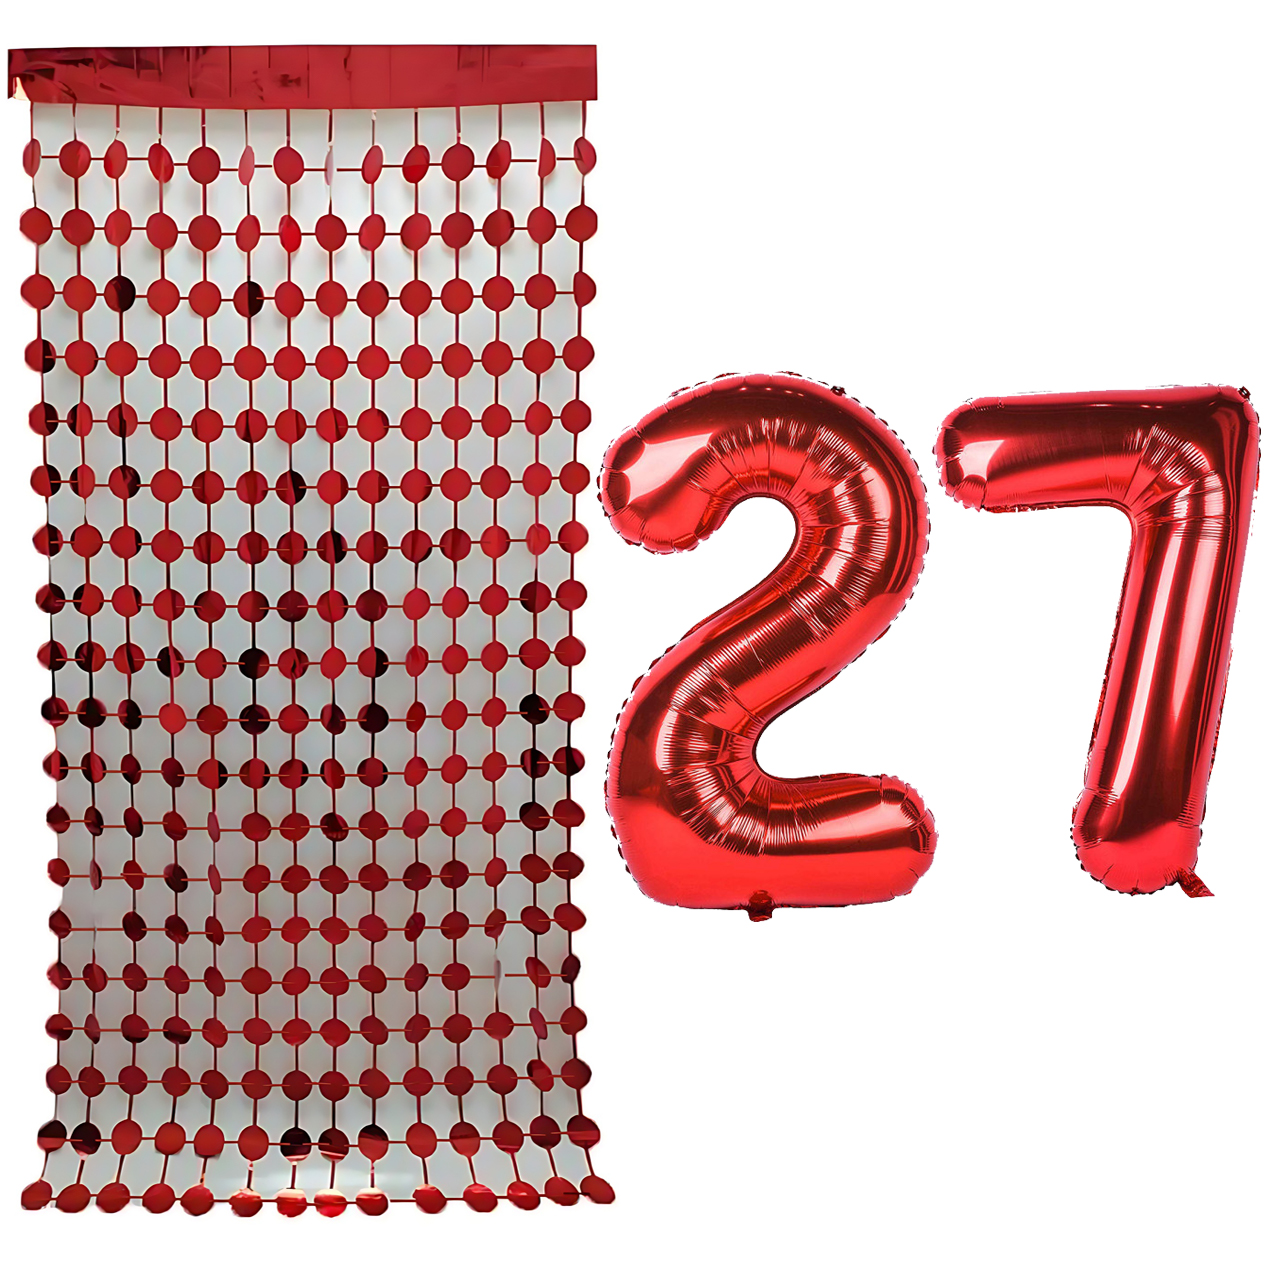 بادکنک فویلی مستر تم طرح عدد 27 به همراه ریسه تزئینی بسته 3 عددی